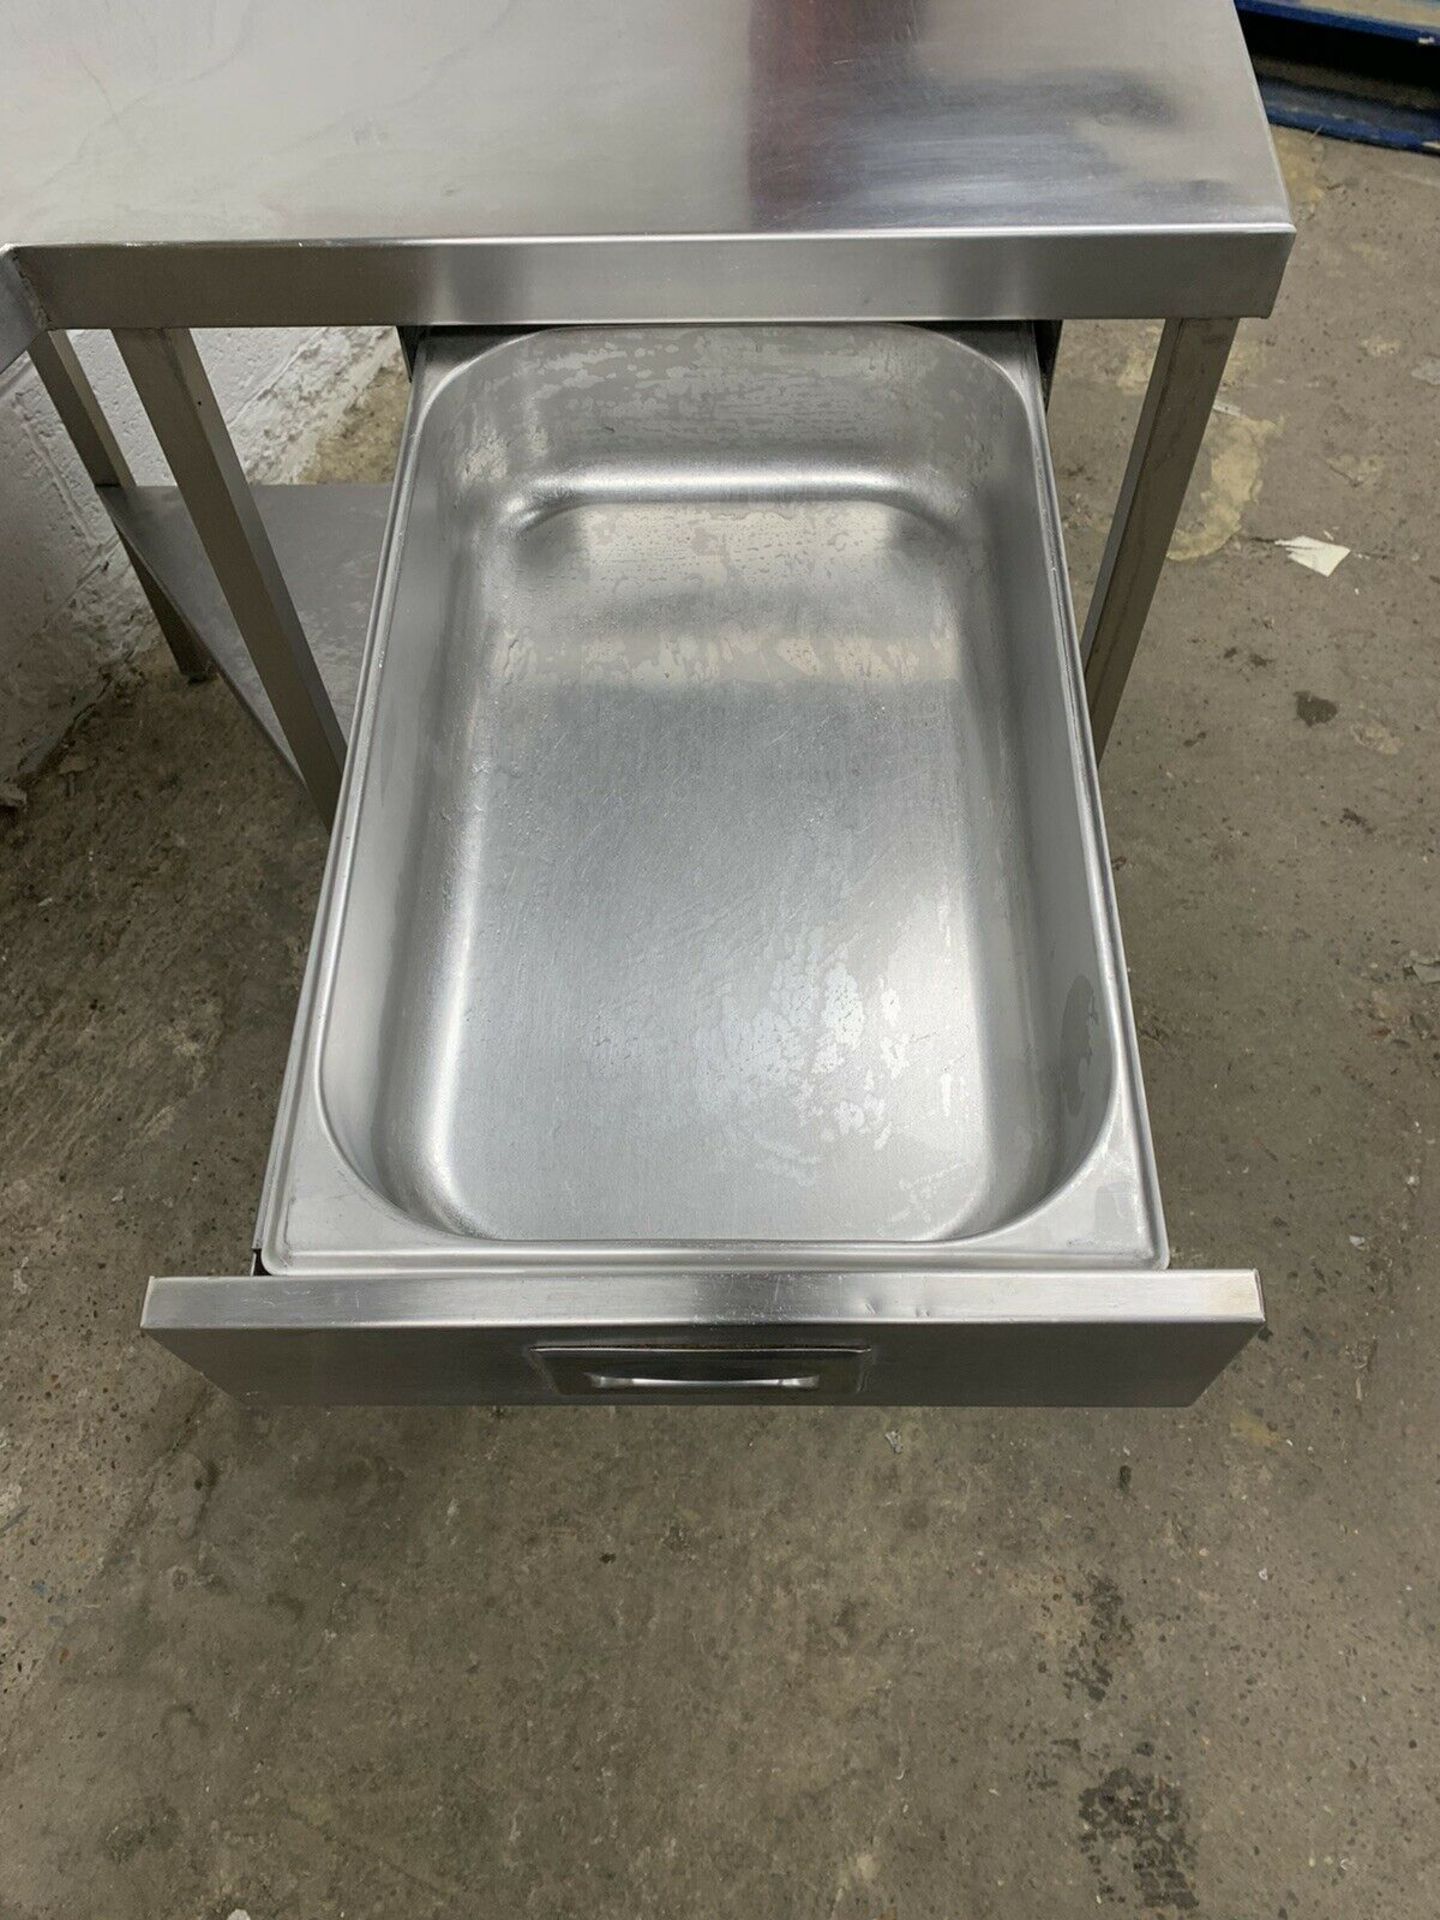 Stainless Steel Single Bowl Sink & Preparation Tab - Image 4 of 5